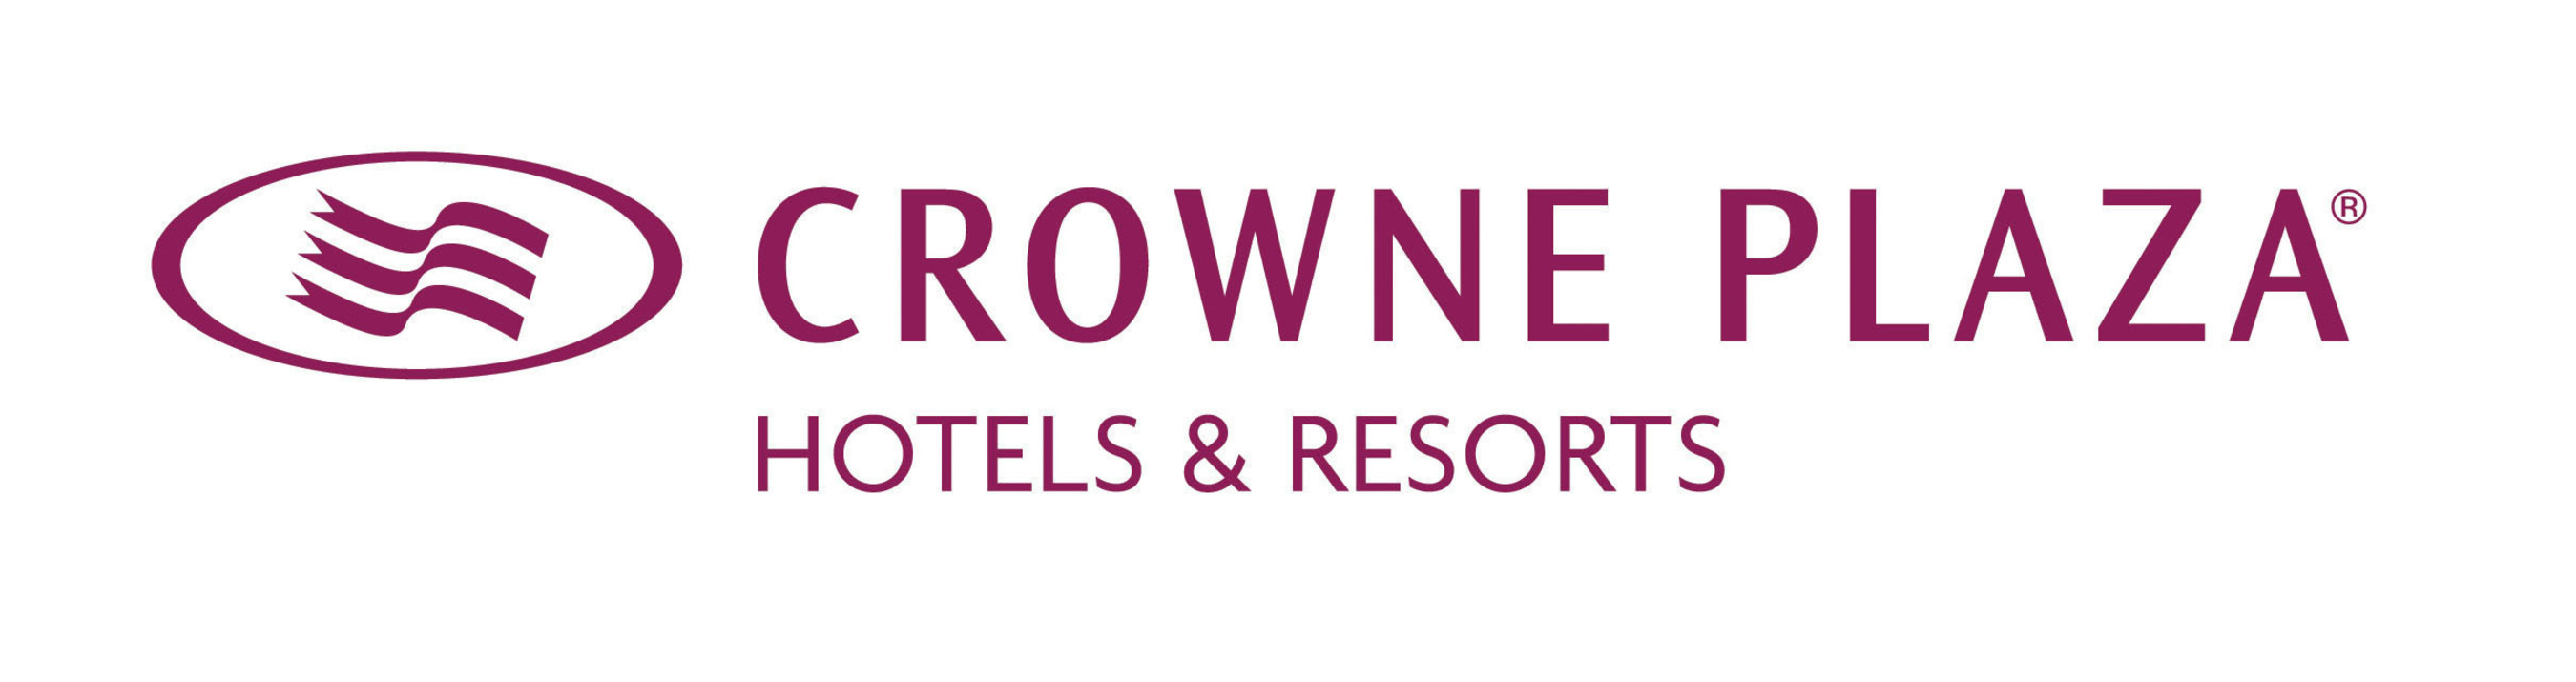 Crowne Plaza Logo. (PRNewsFoto/Crowne Plaza(R) Hotels & Resorts) (PRNewsFoto/CROWNE PLAZA(R) HOTELS & RESORTS)